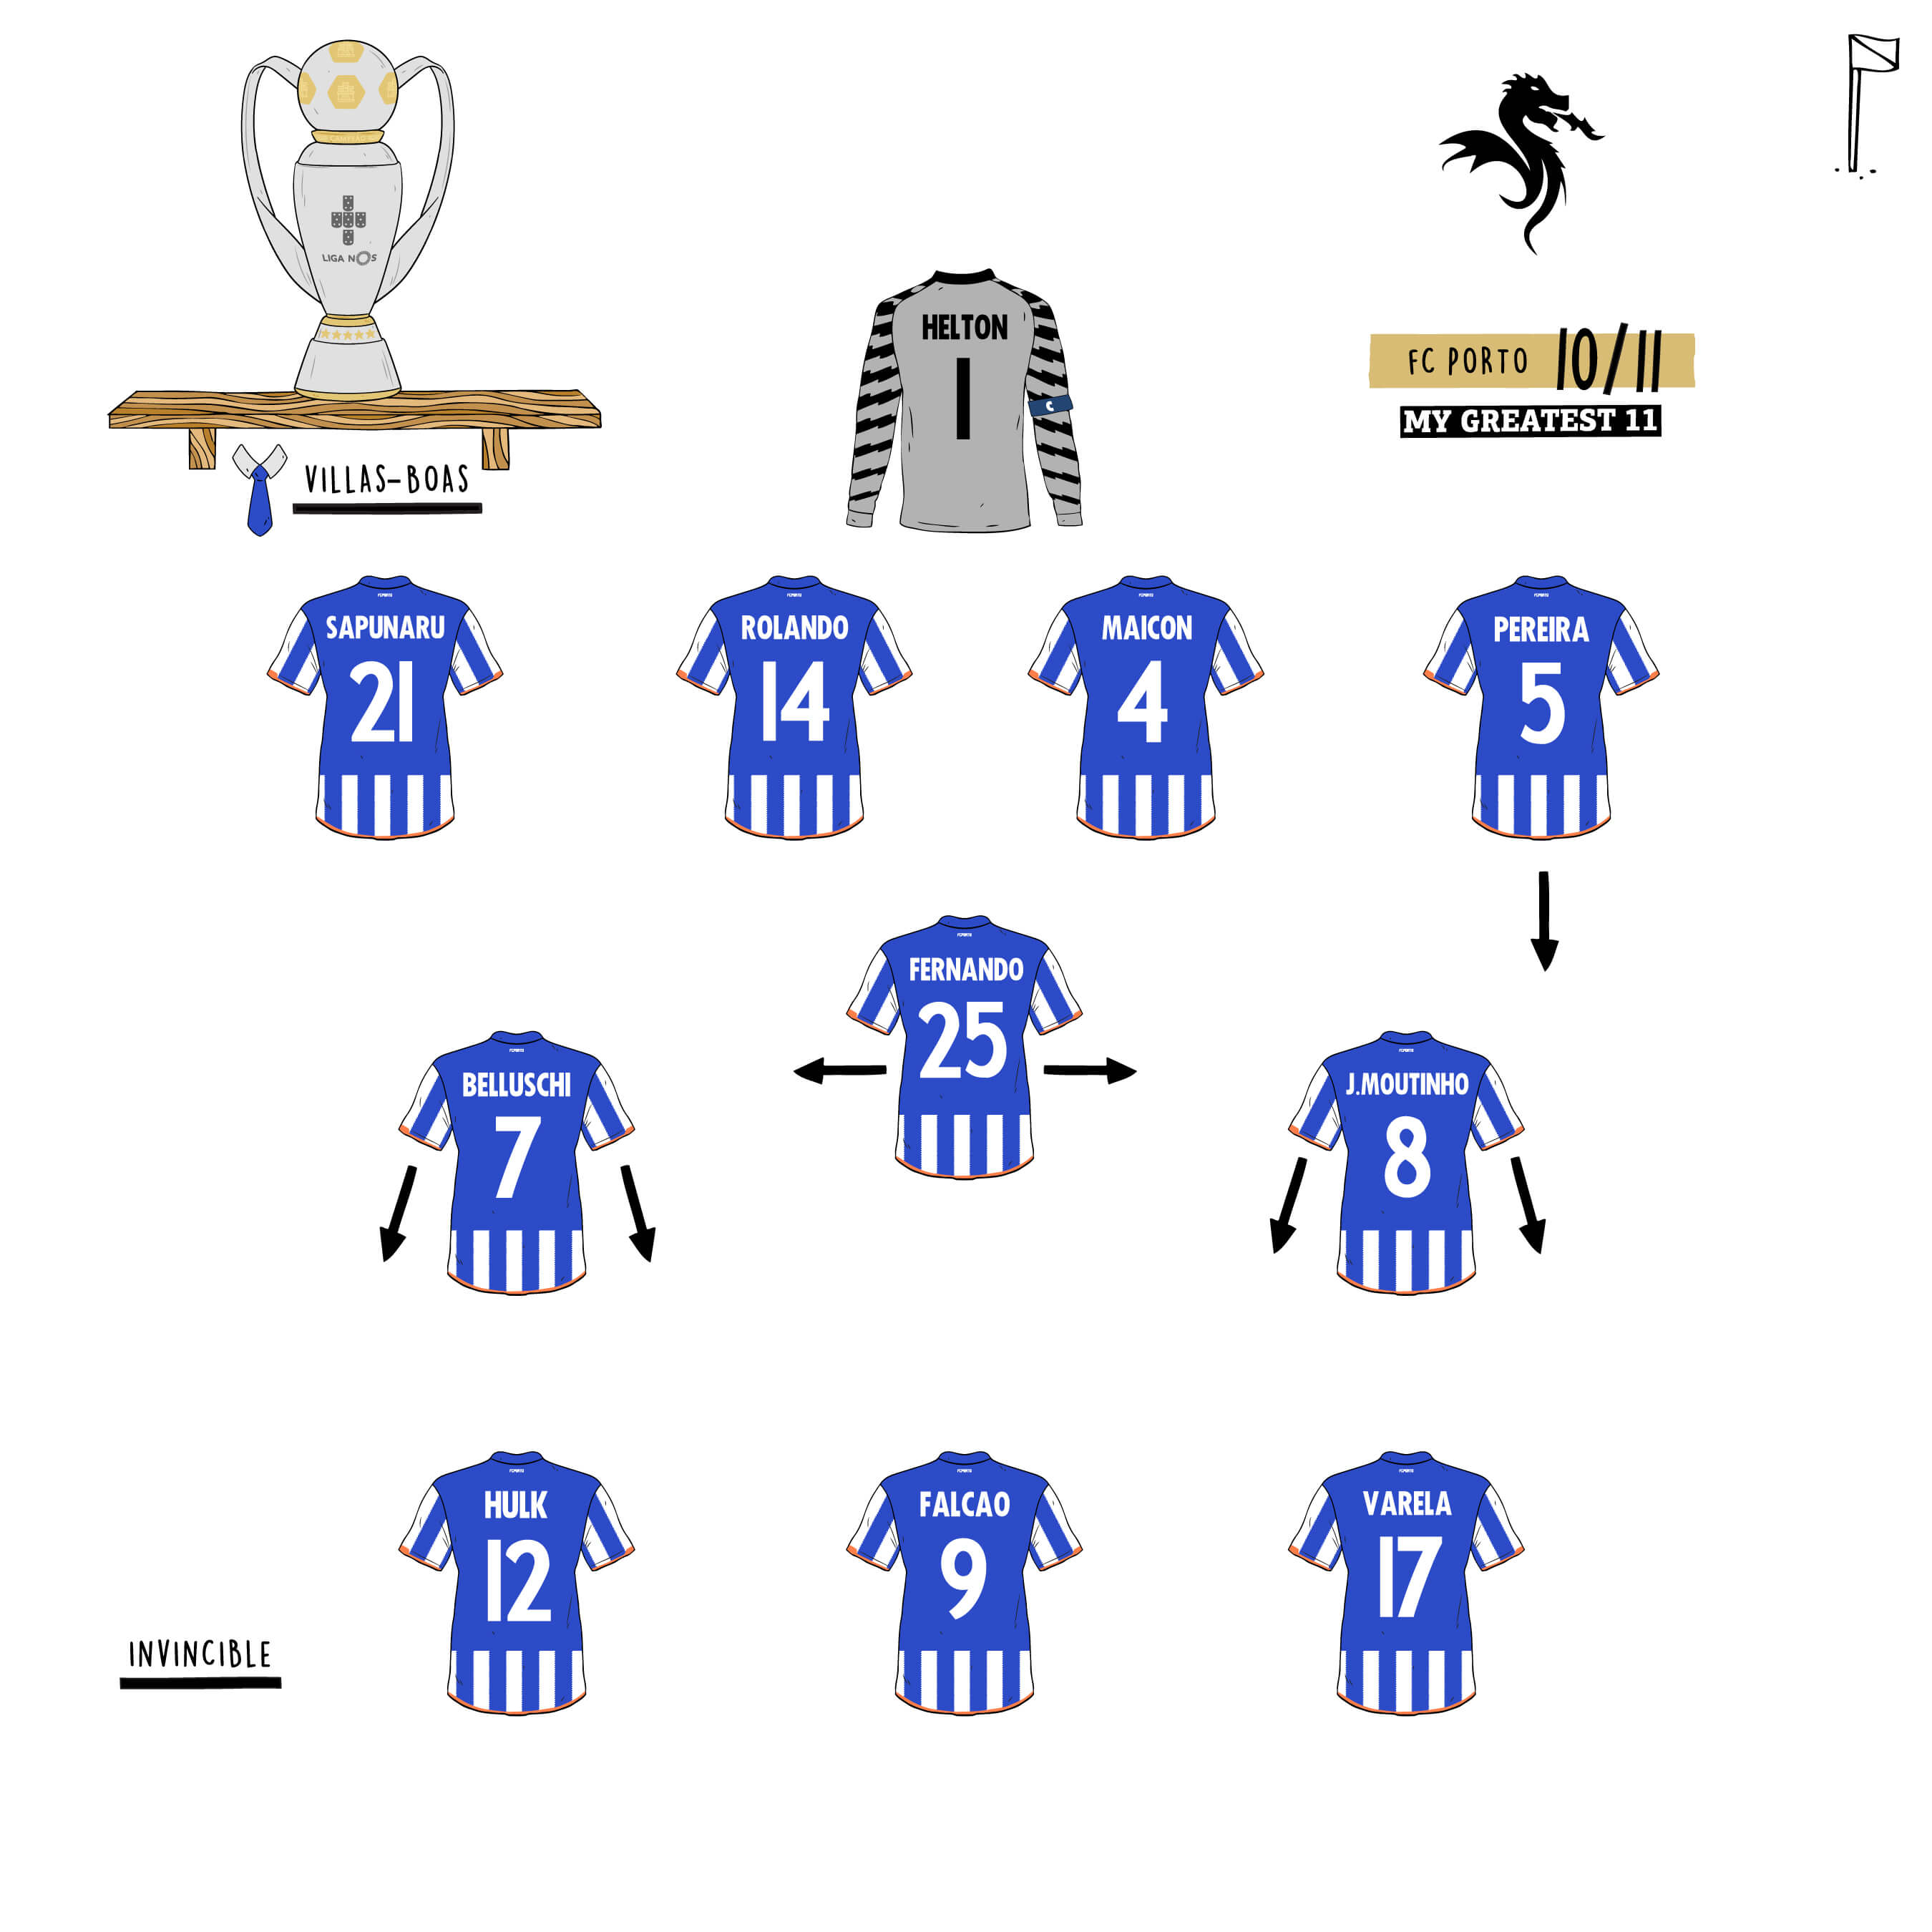 FC Porto 10/11 Team